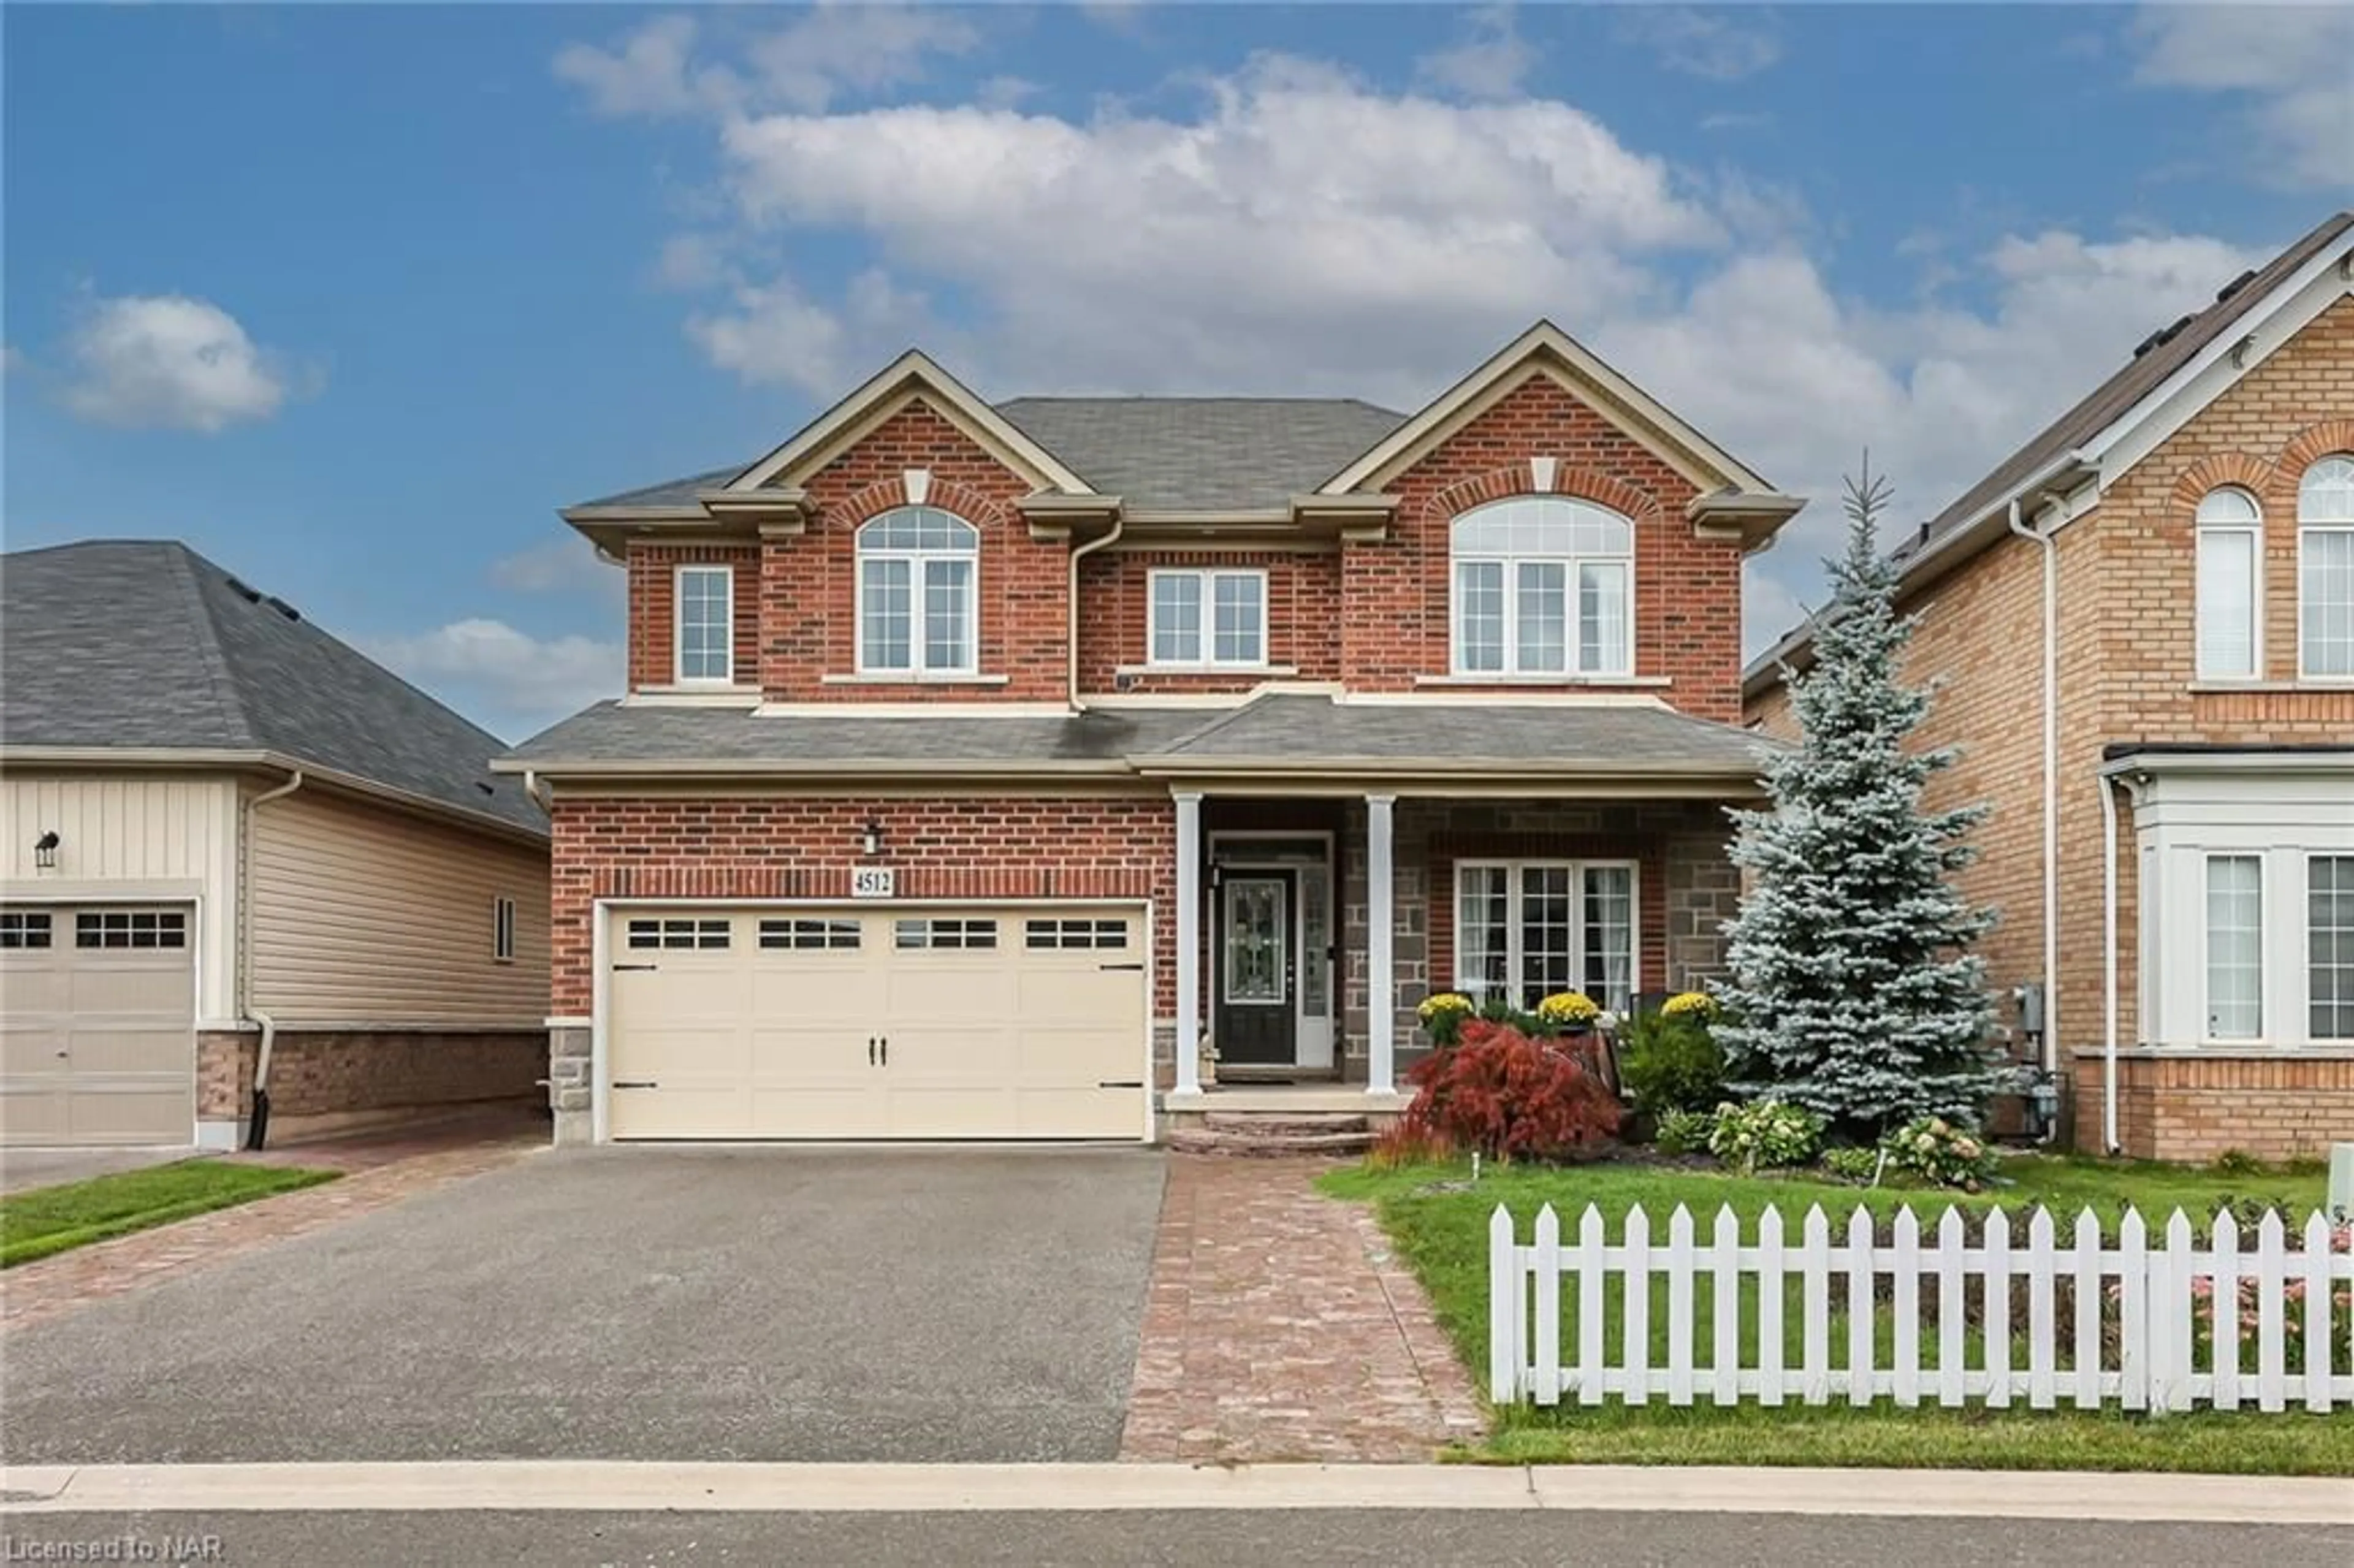 Home with brick exterior material for 4512 Cinnamon Grove, Niagara Falls Ontario L2G 0A4